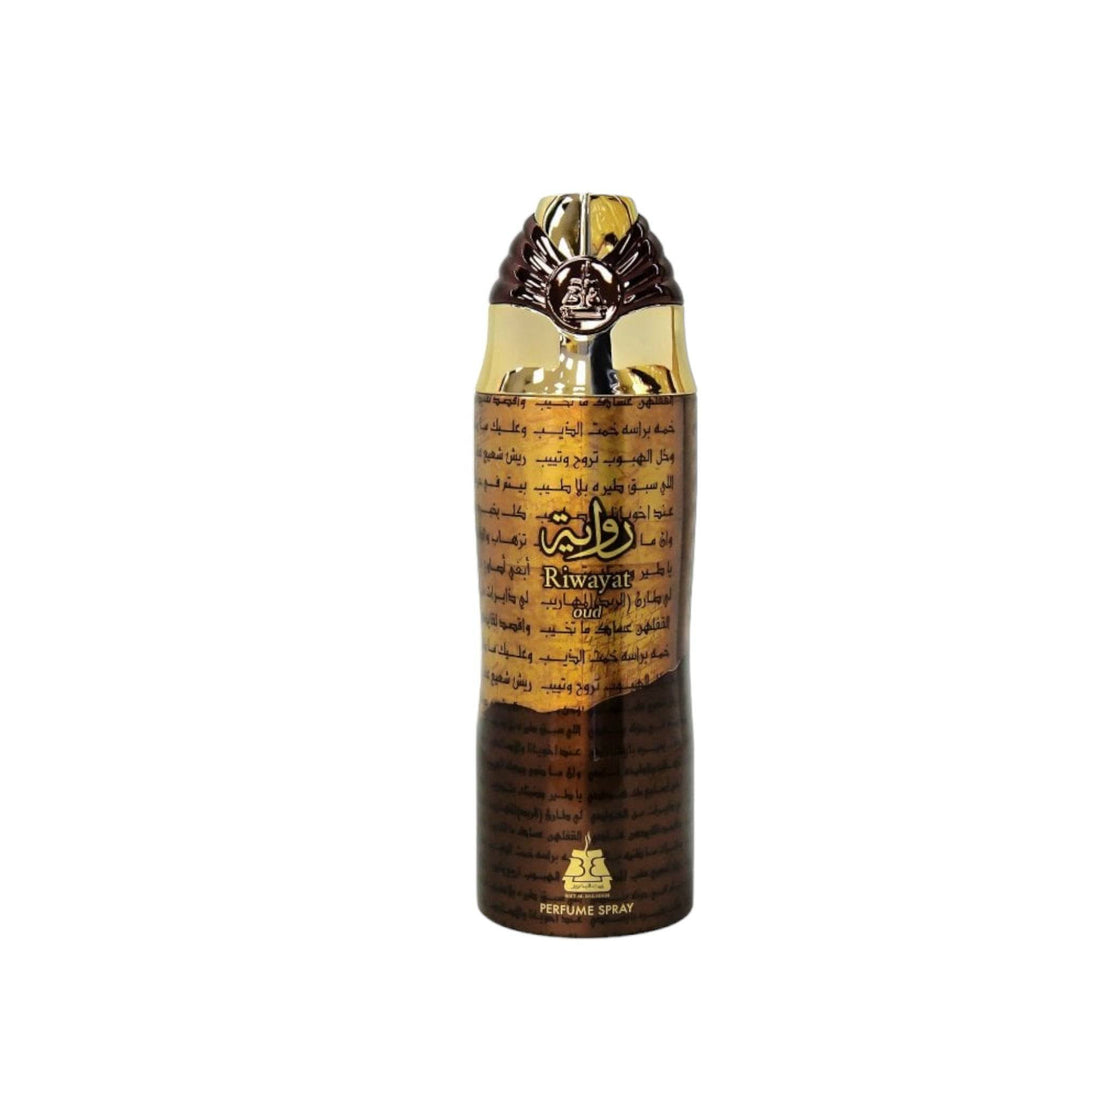 Elegant bottle of Riwayat Oud Deodorant 200ml displayed against a serene background, highlighting its sophisticated design.